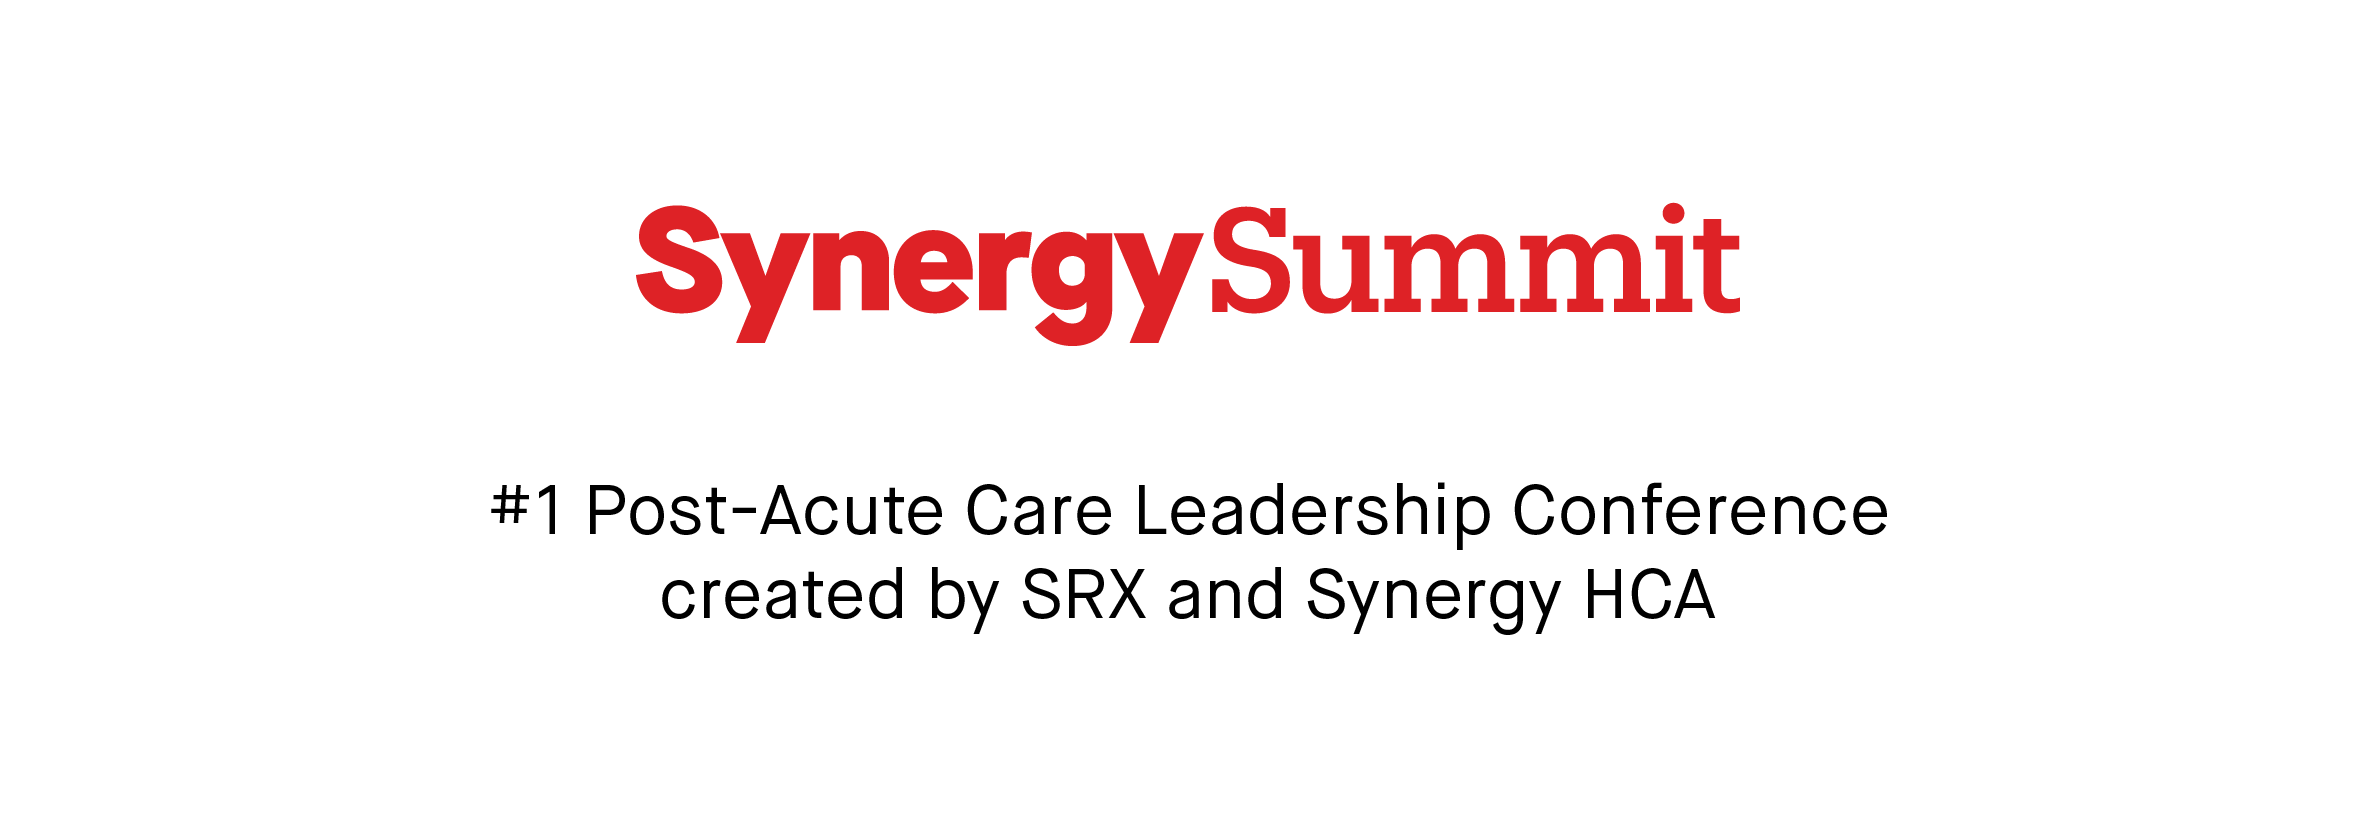 Synergy Summit 2021